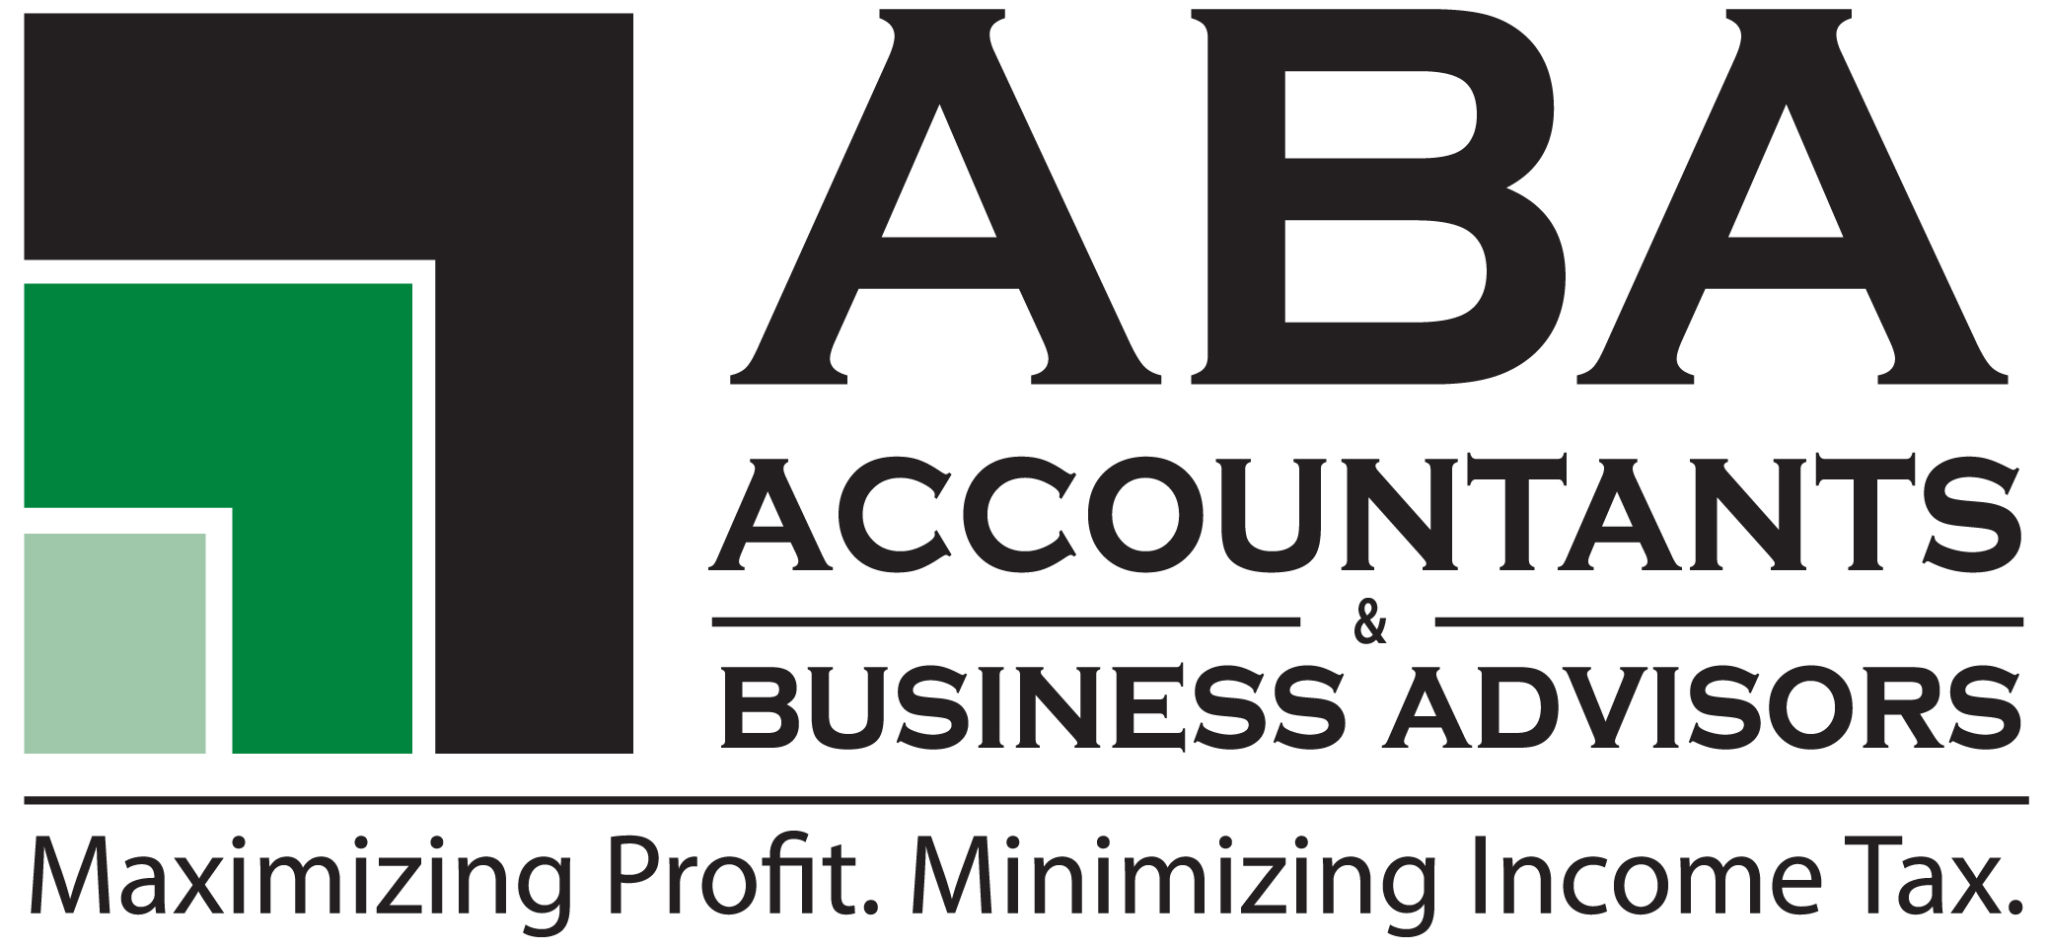 Accountants & Business Advisors